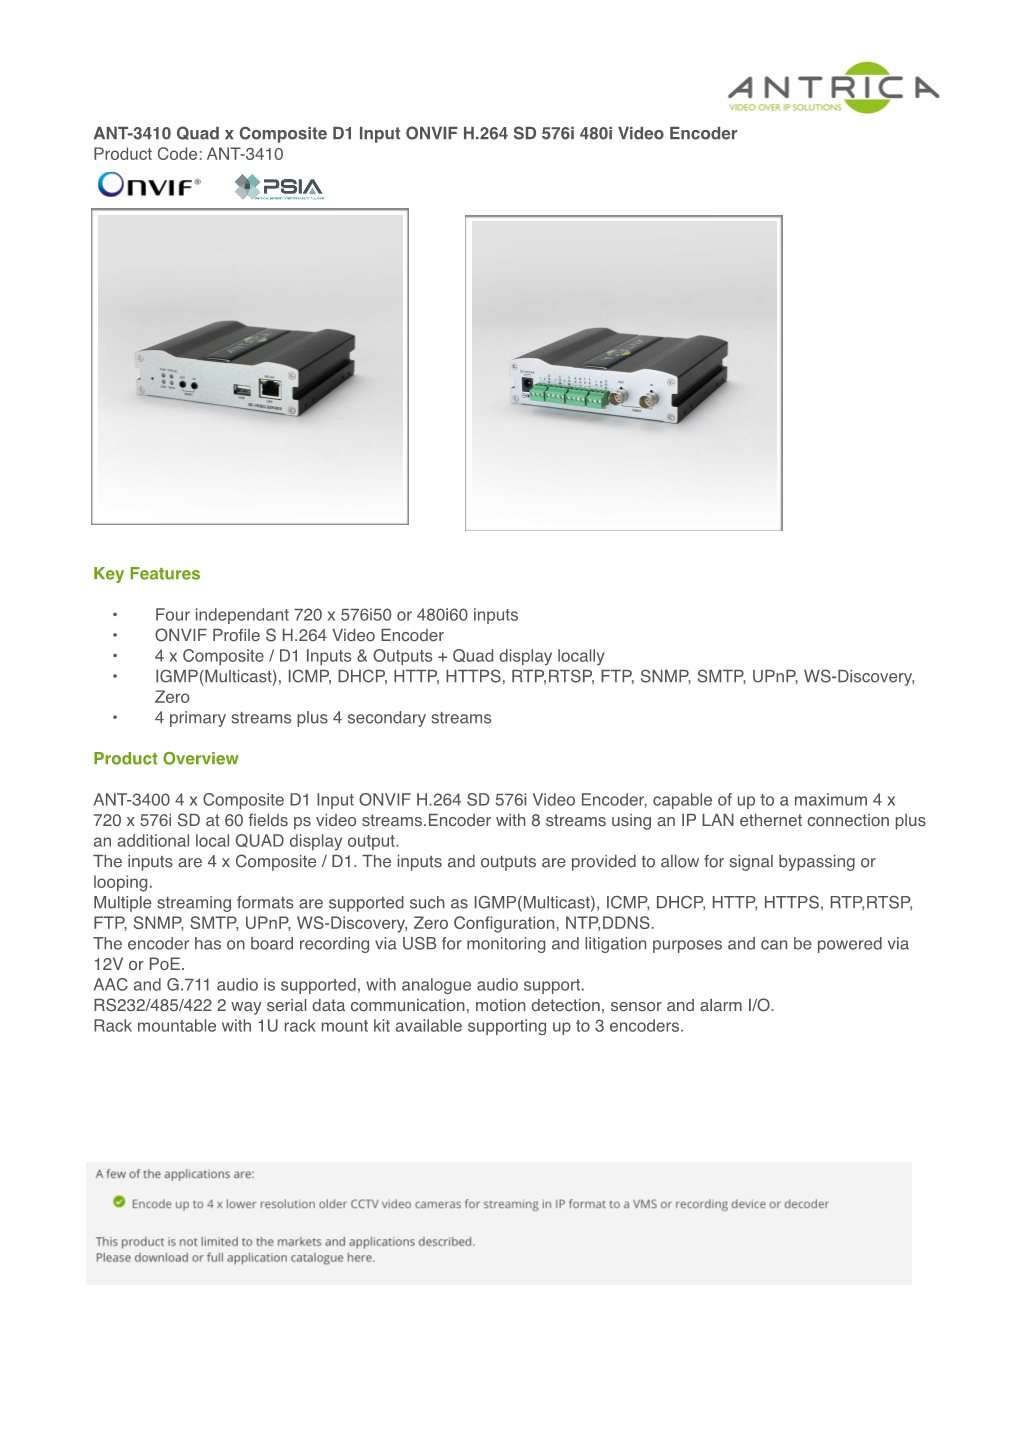 ANT-3410 Quad X Composite D1 Input ONVIF H.264 SD 576I 480I Video Encoder Product Code: ANT-3410